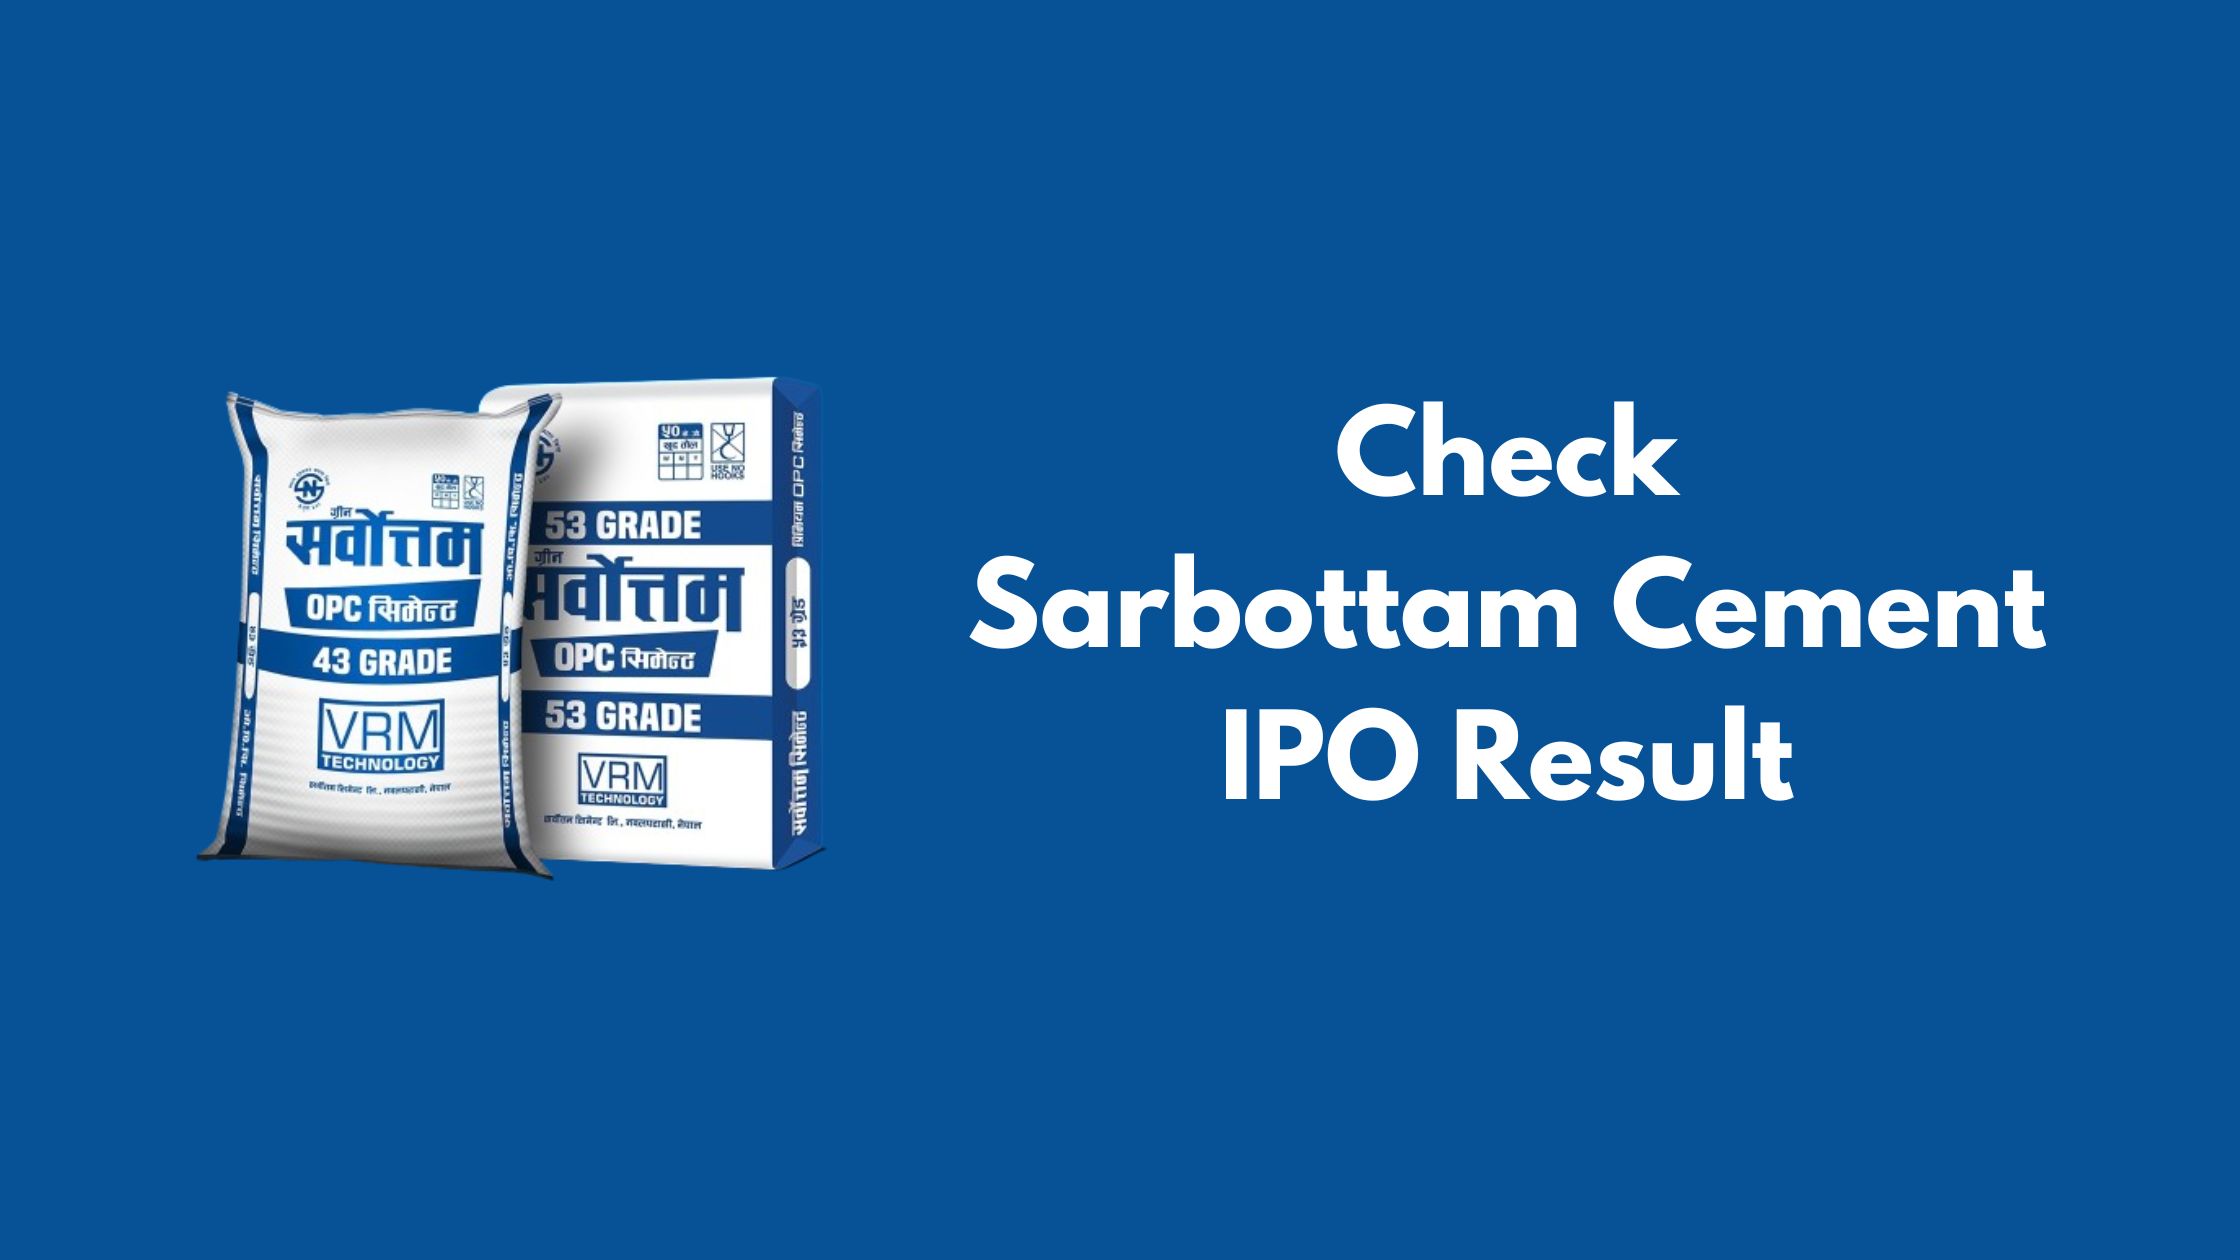 Check Sarbottam Cement IPO Result